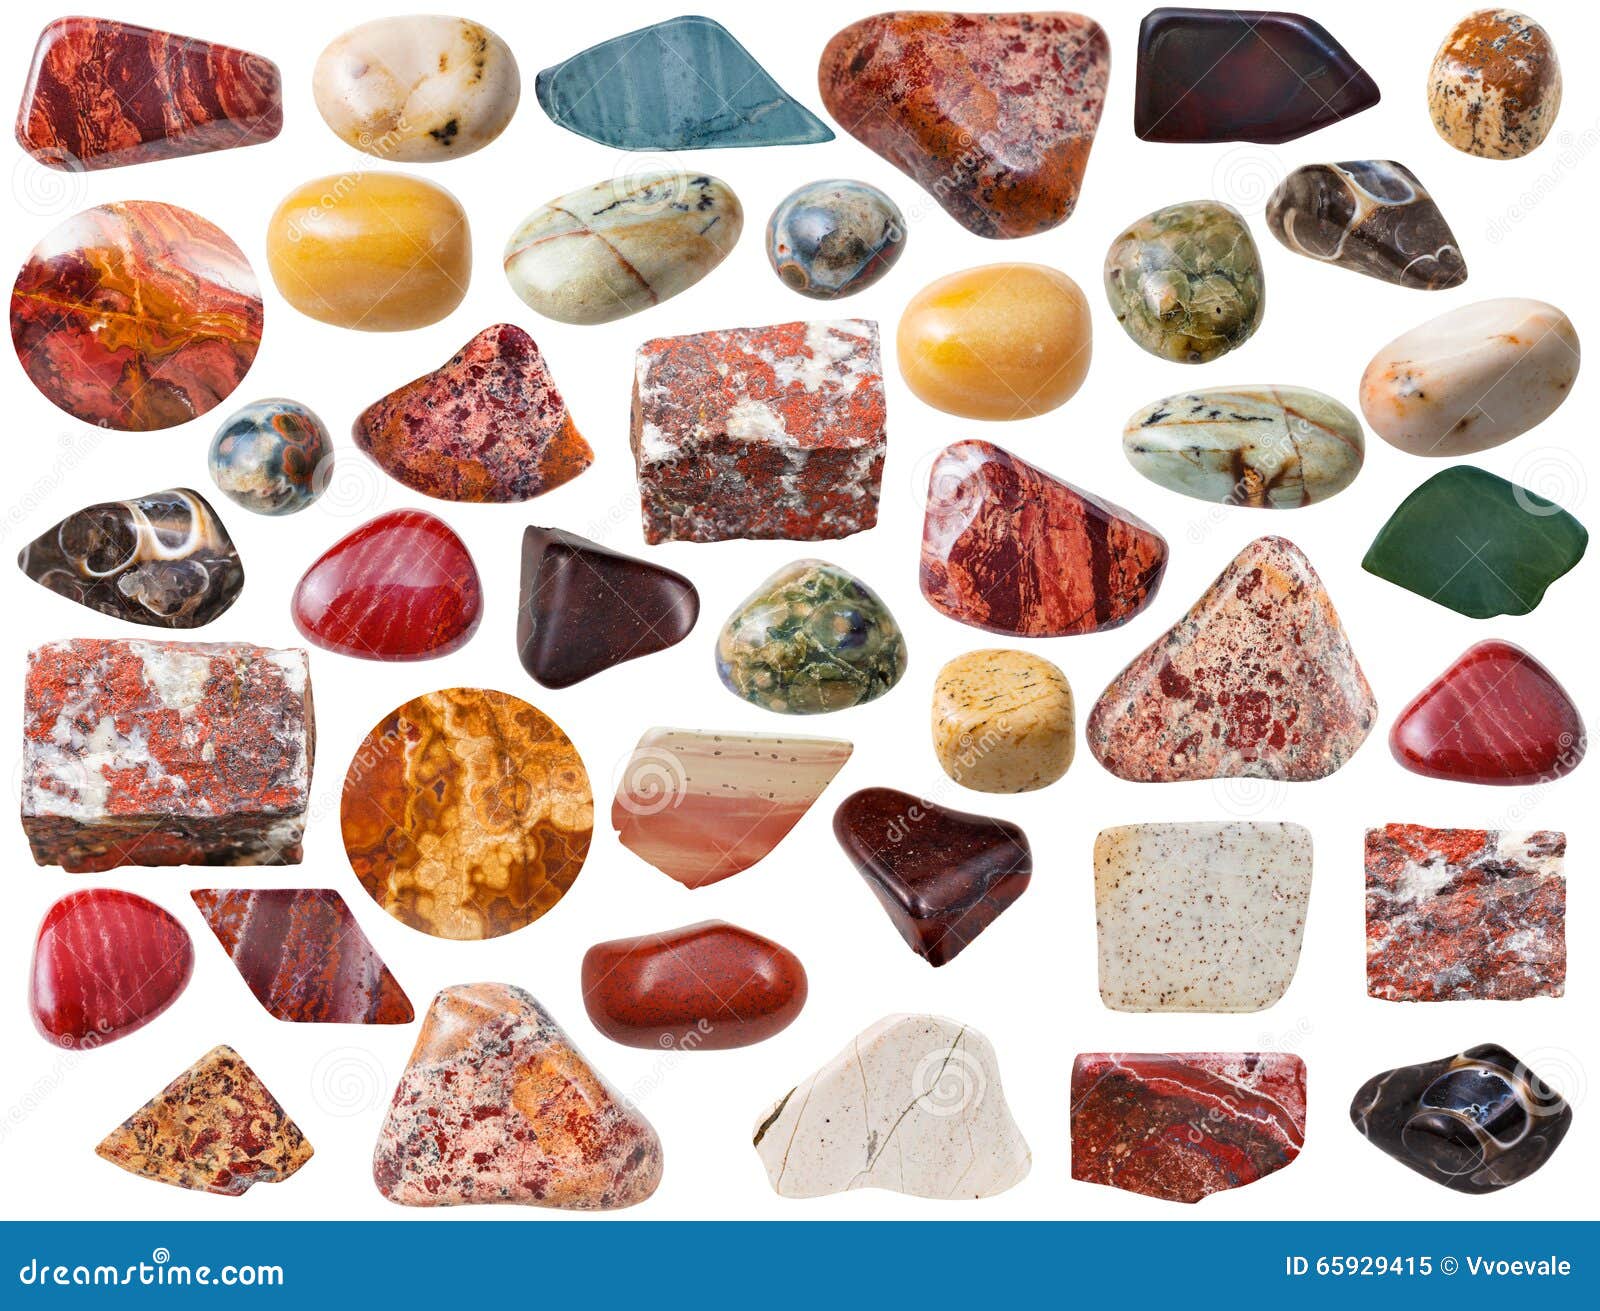 various jasper natural mineral gem stones and rock